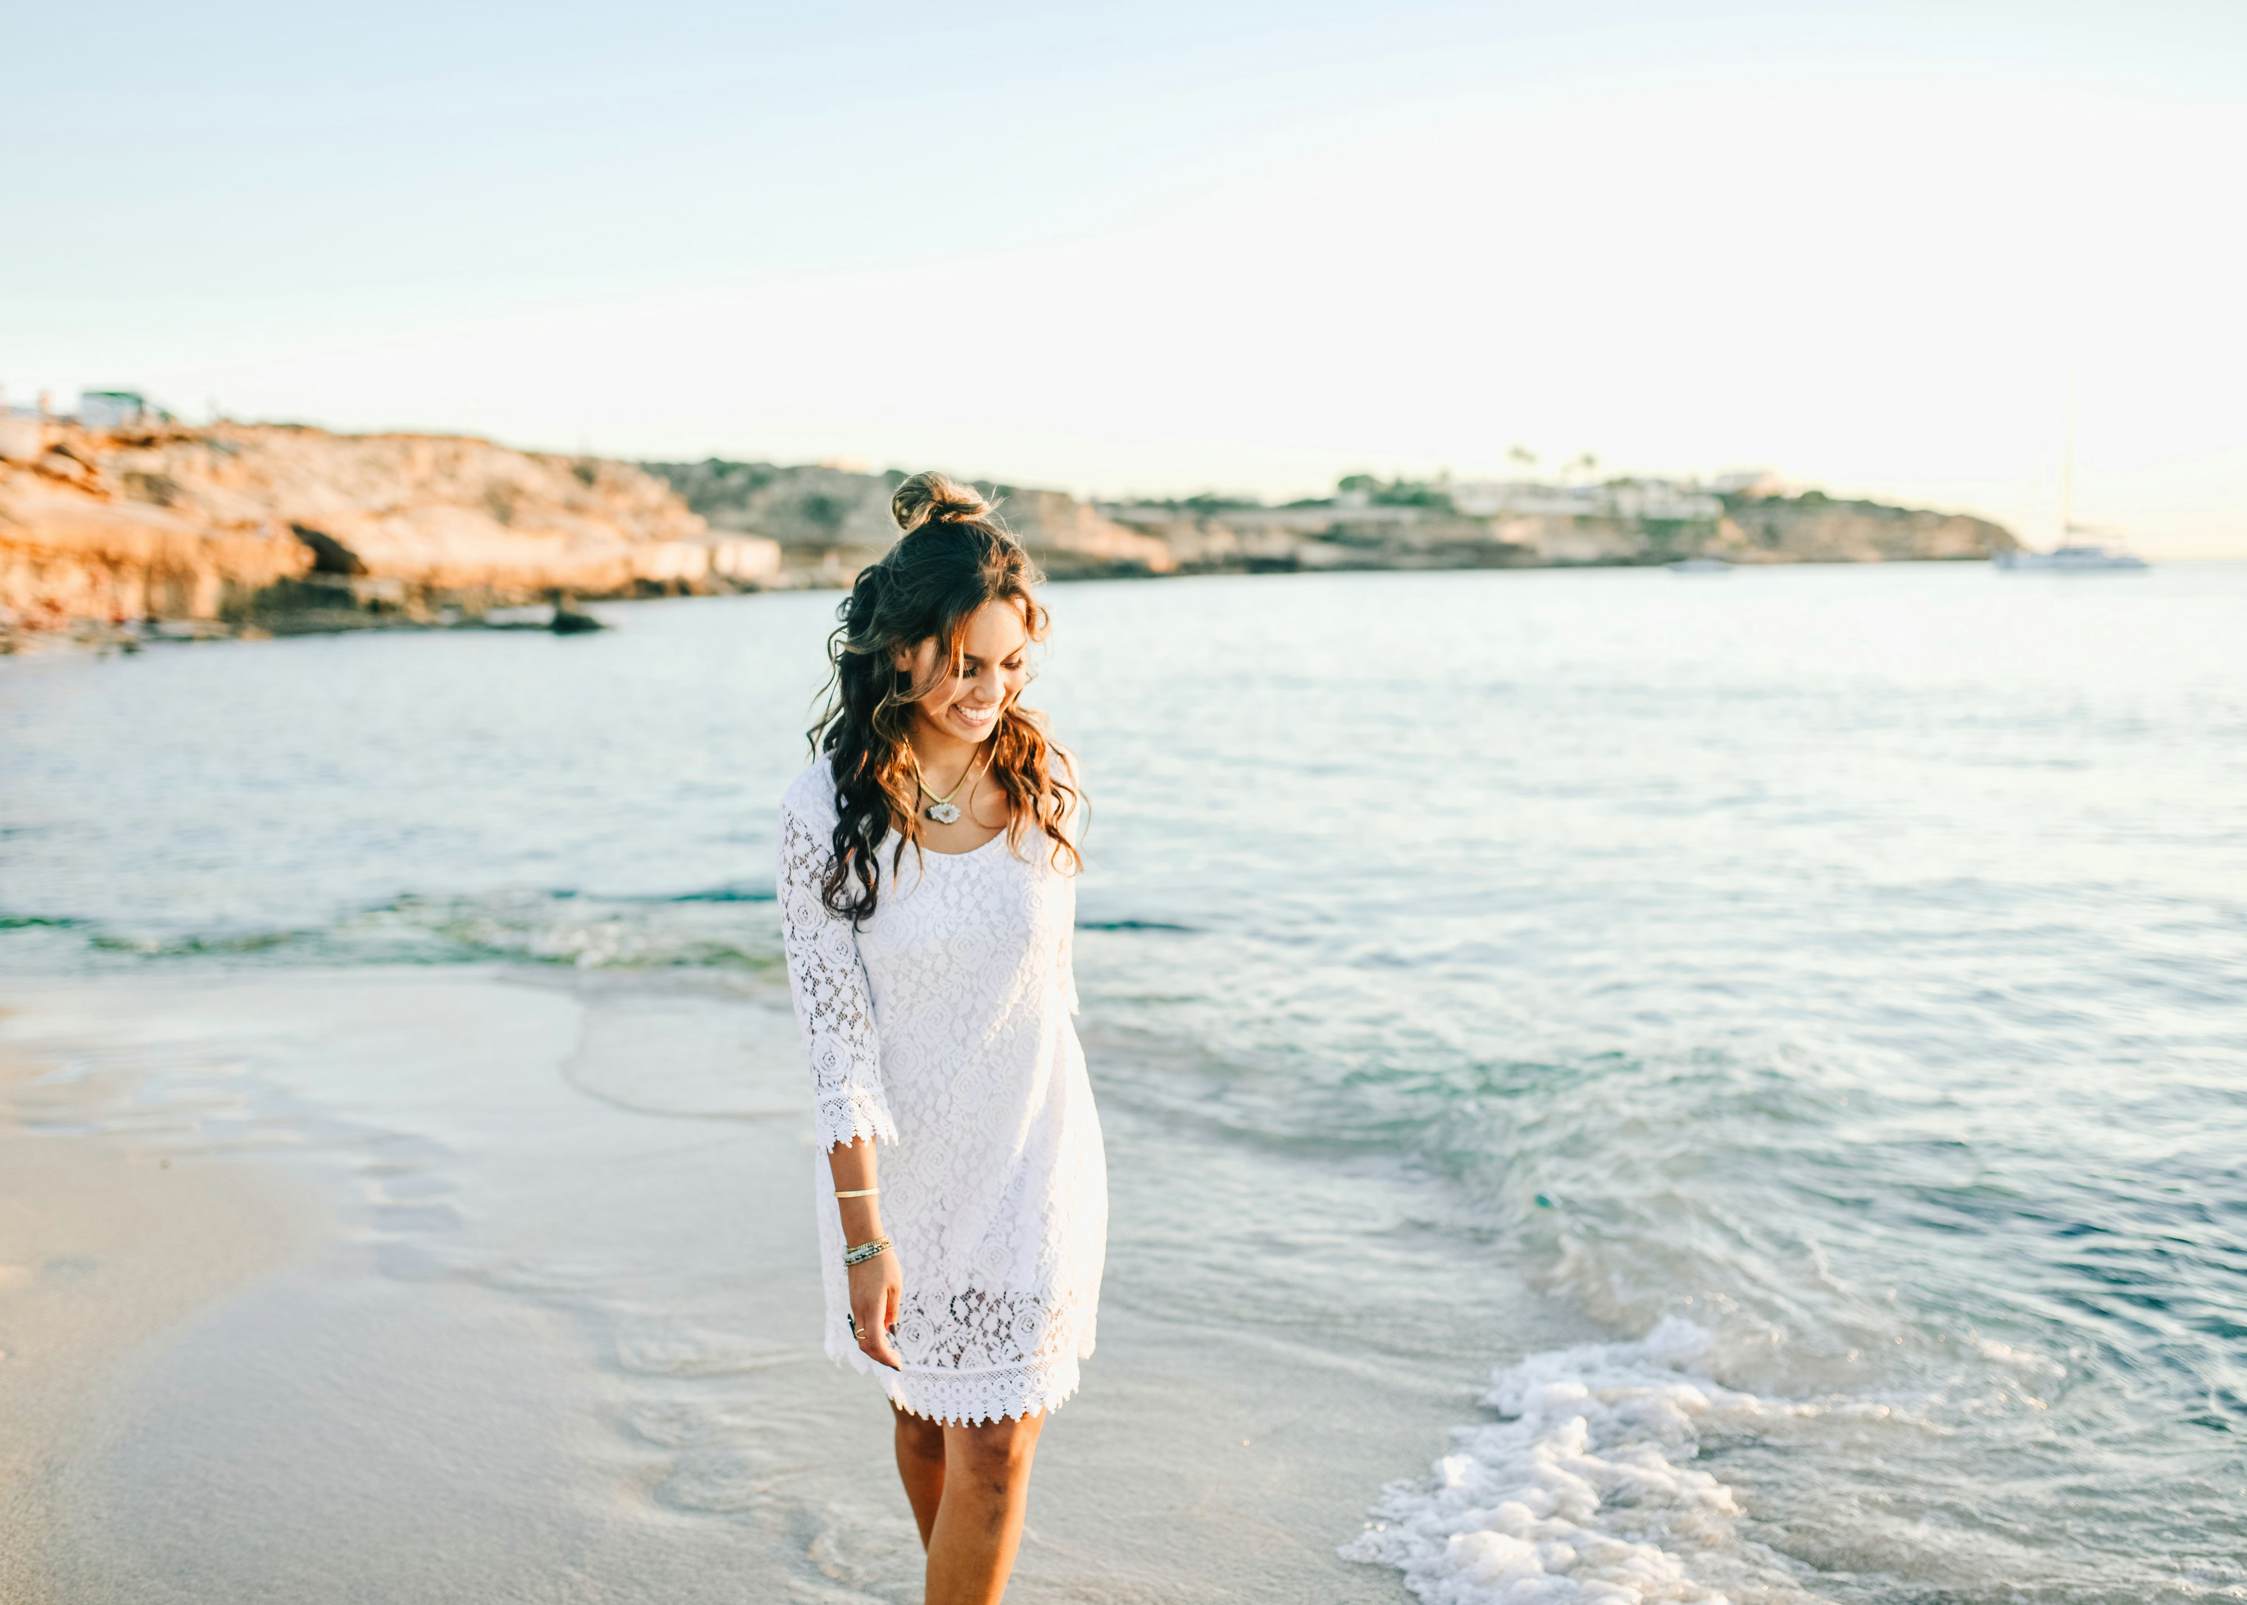 Fine art wedding photographer Wedding Bridal shoot Ibiza - Bohemian bride by the ocean